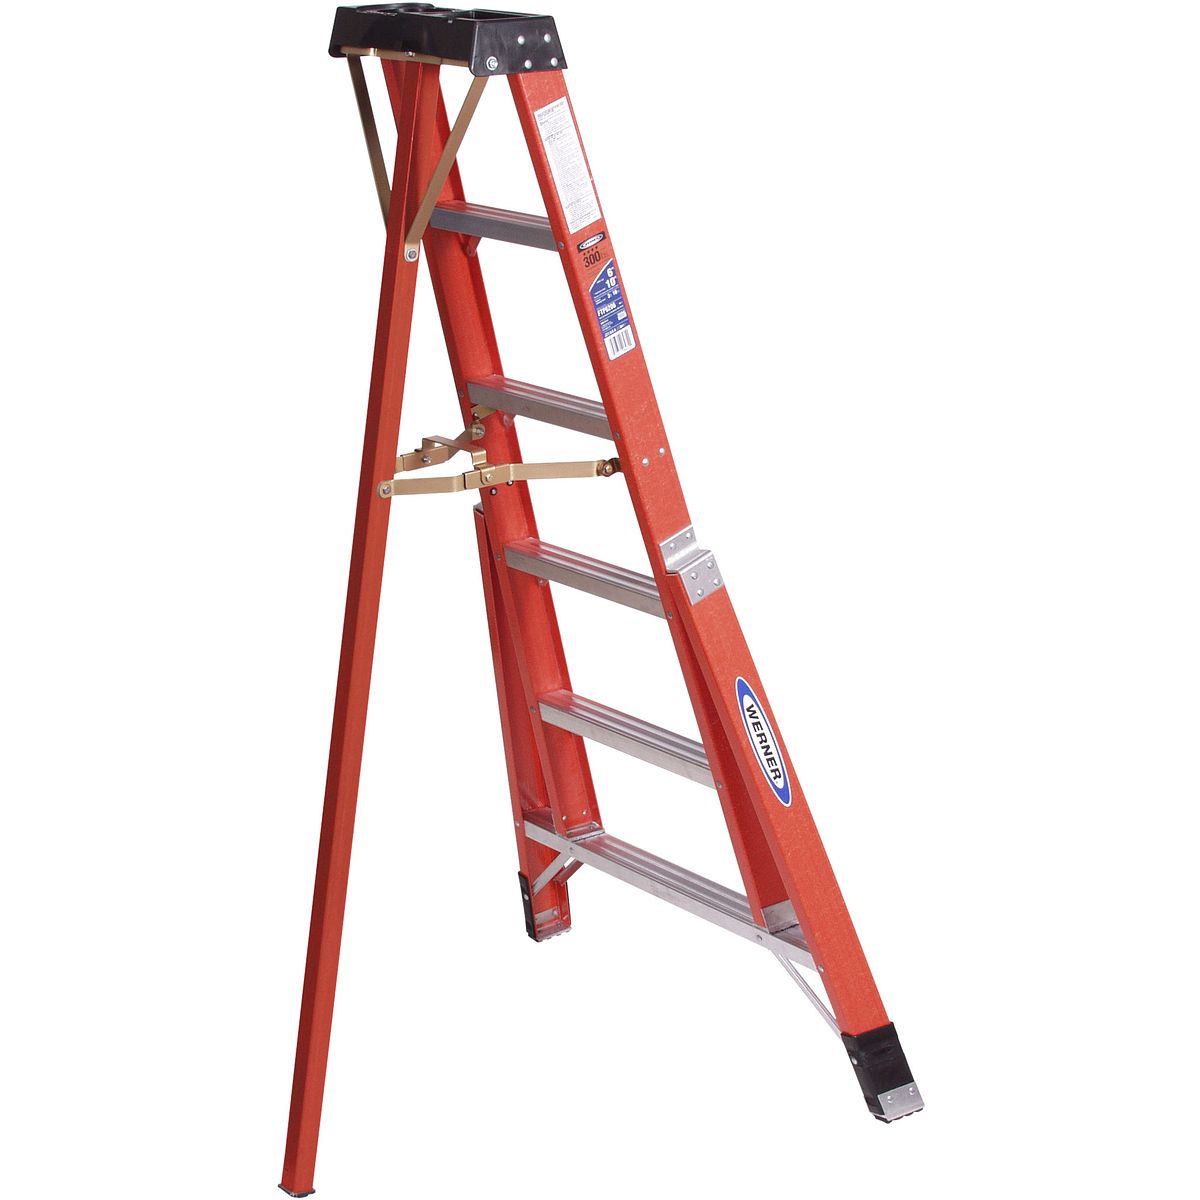 FTP6212, Step Ladders